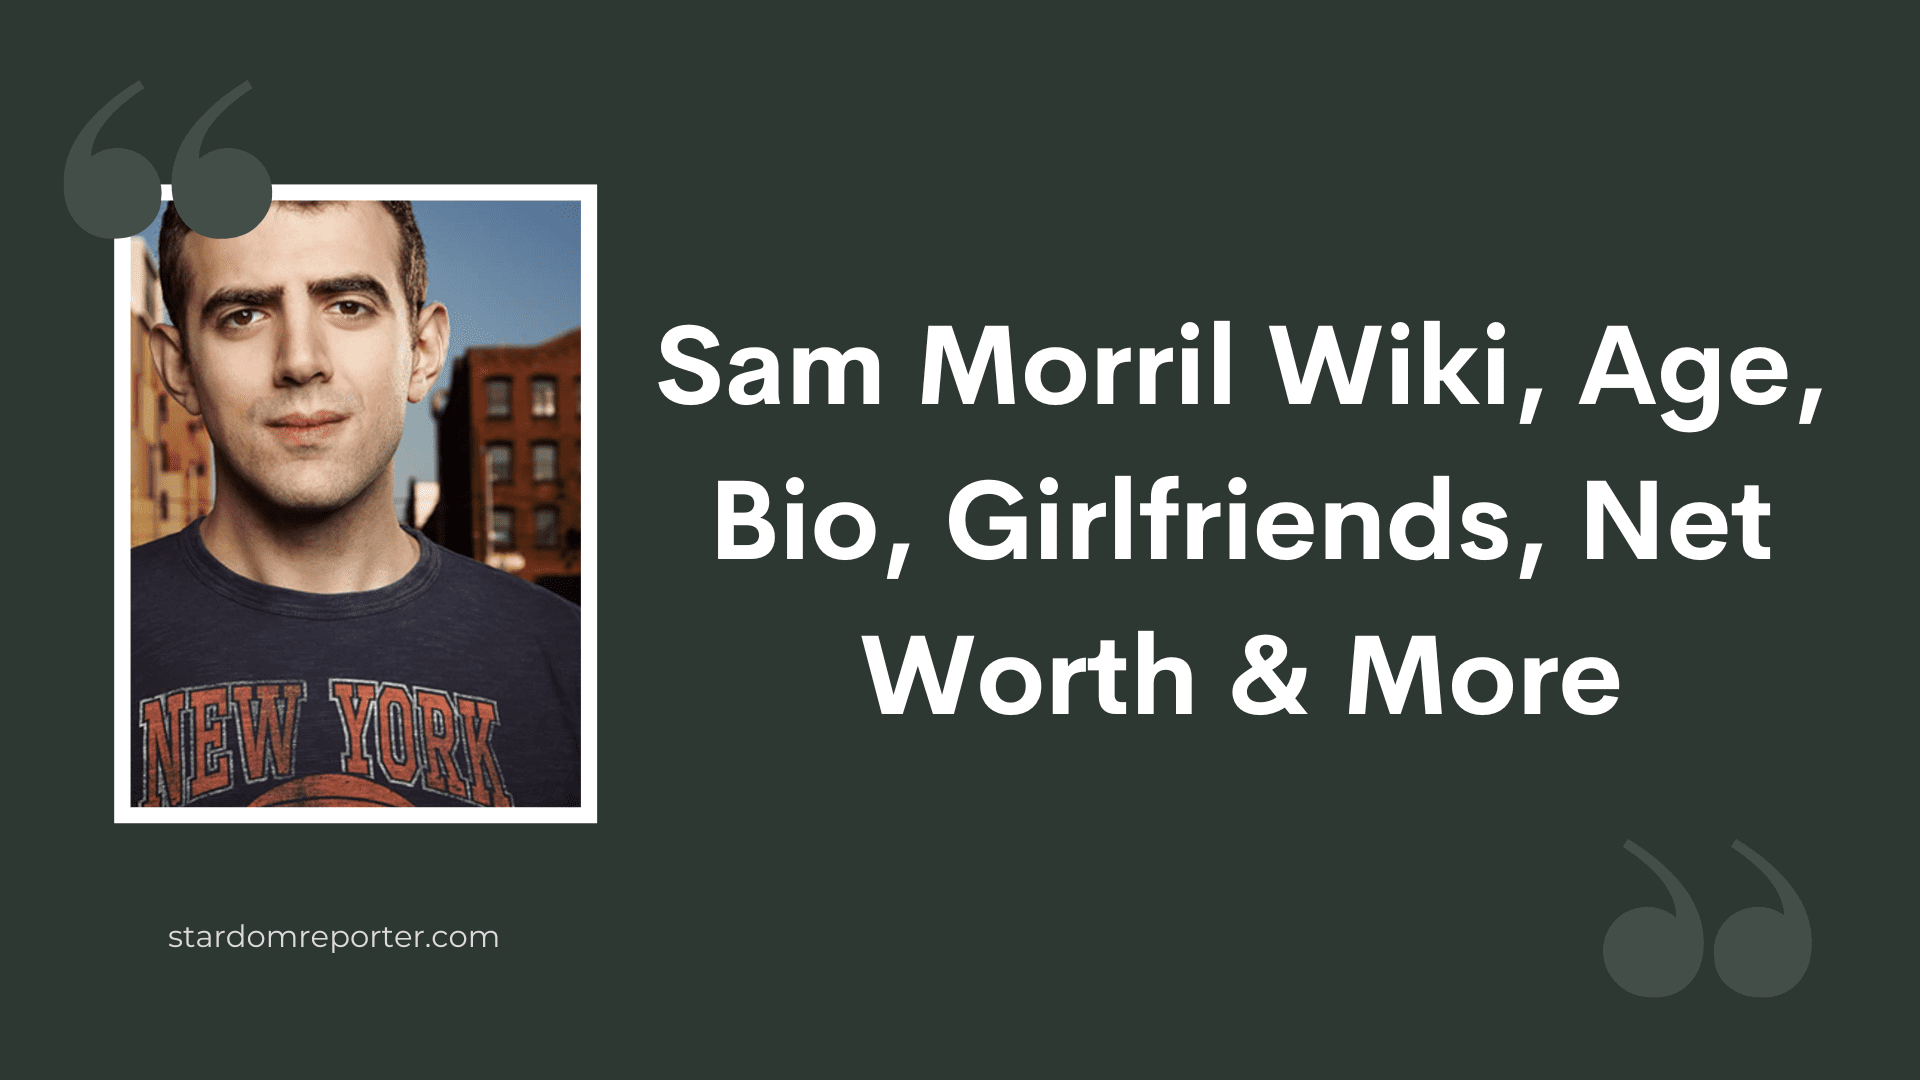 Sam Morril Wiki, Age, Bio, Girlfriends, Net Worth & More - 33